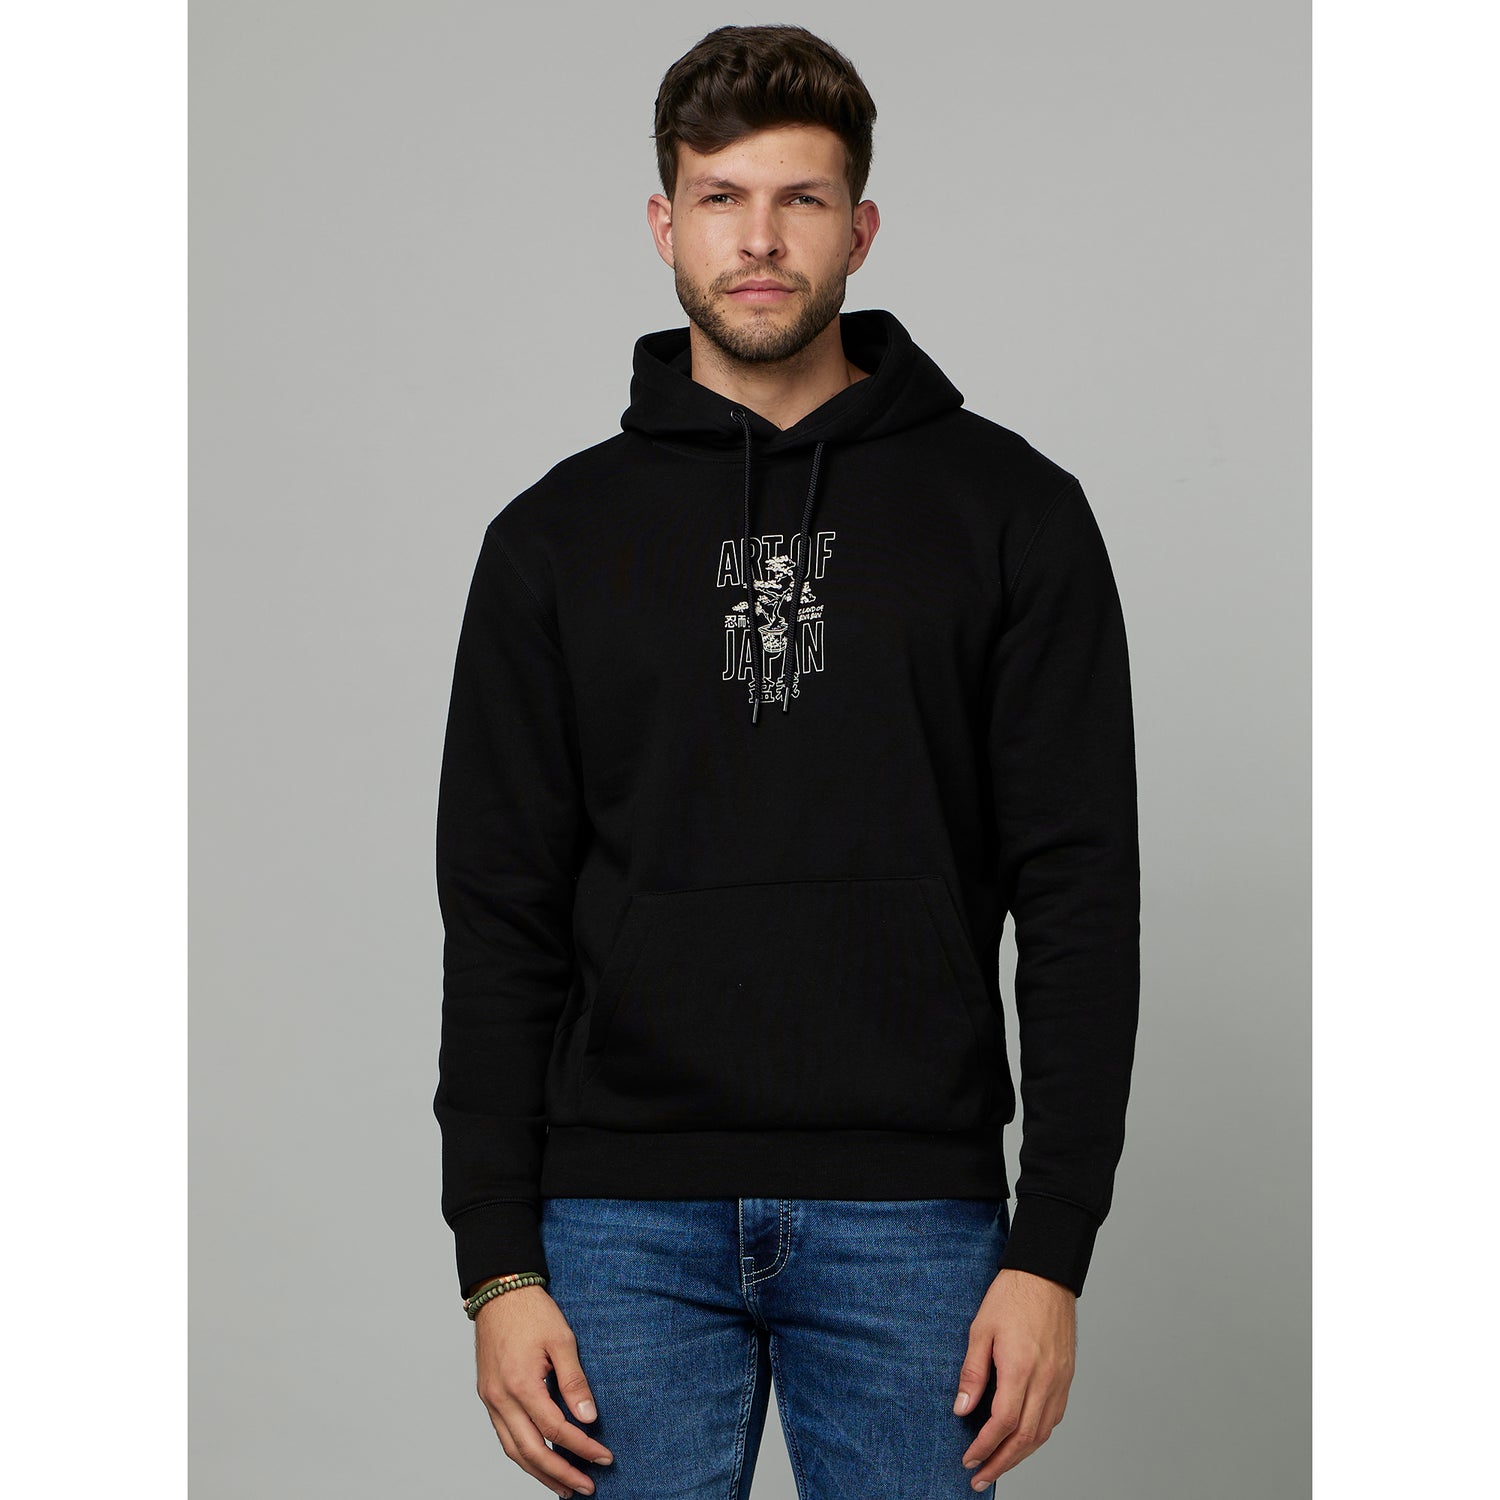 Black Graphic Printed Hooded Cotton Pullover Sweatshirt (FEJABOWL)